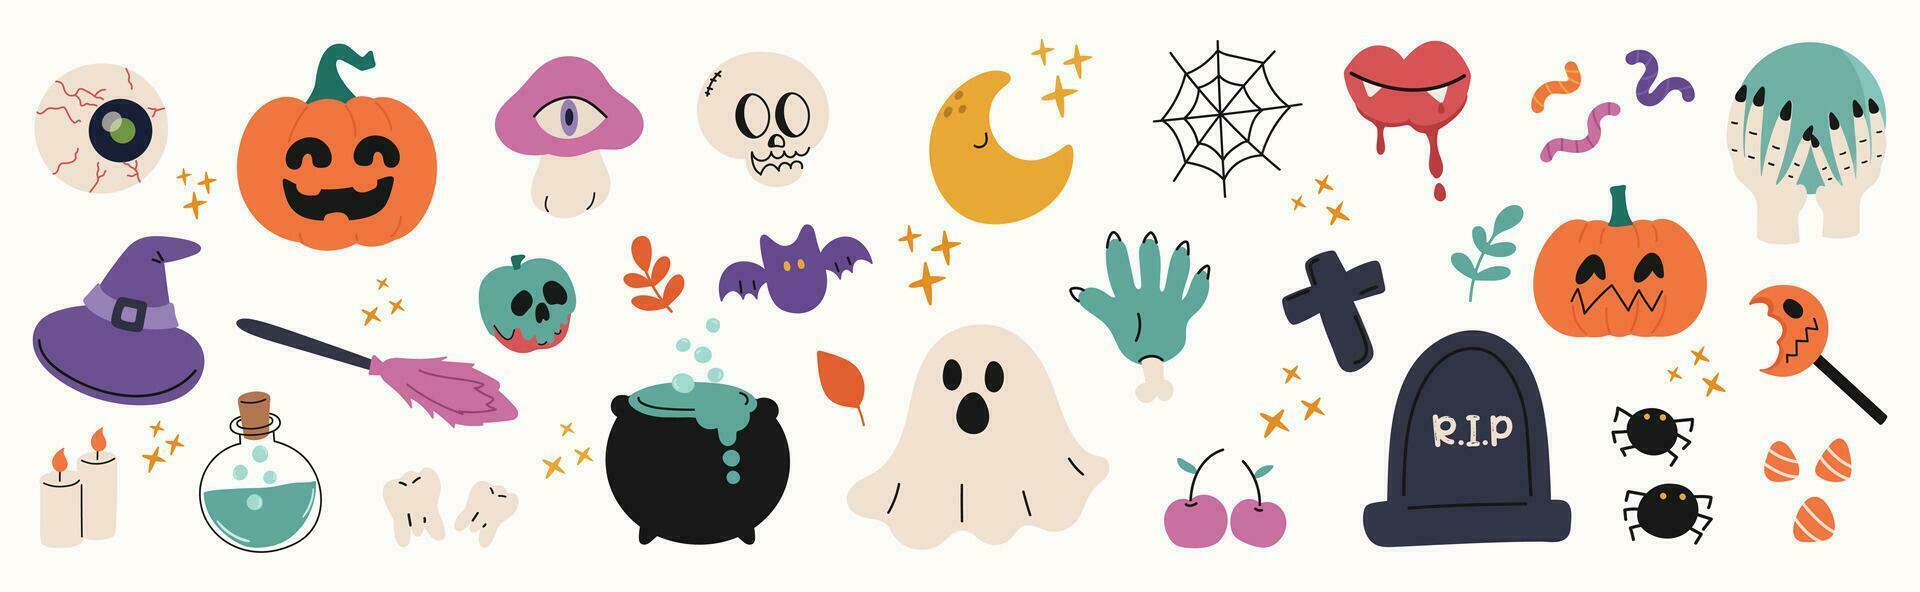 Happy Halloween day element background vector. Cute collection of spooky ghost, pumpkin, bat, lollipop, grave, skull, mushroom, spirit. Adorable halloween festival elements for decoration, prints. vector